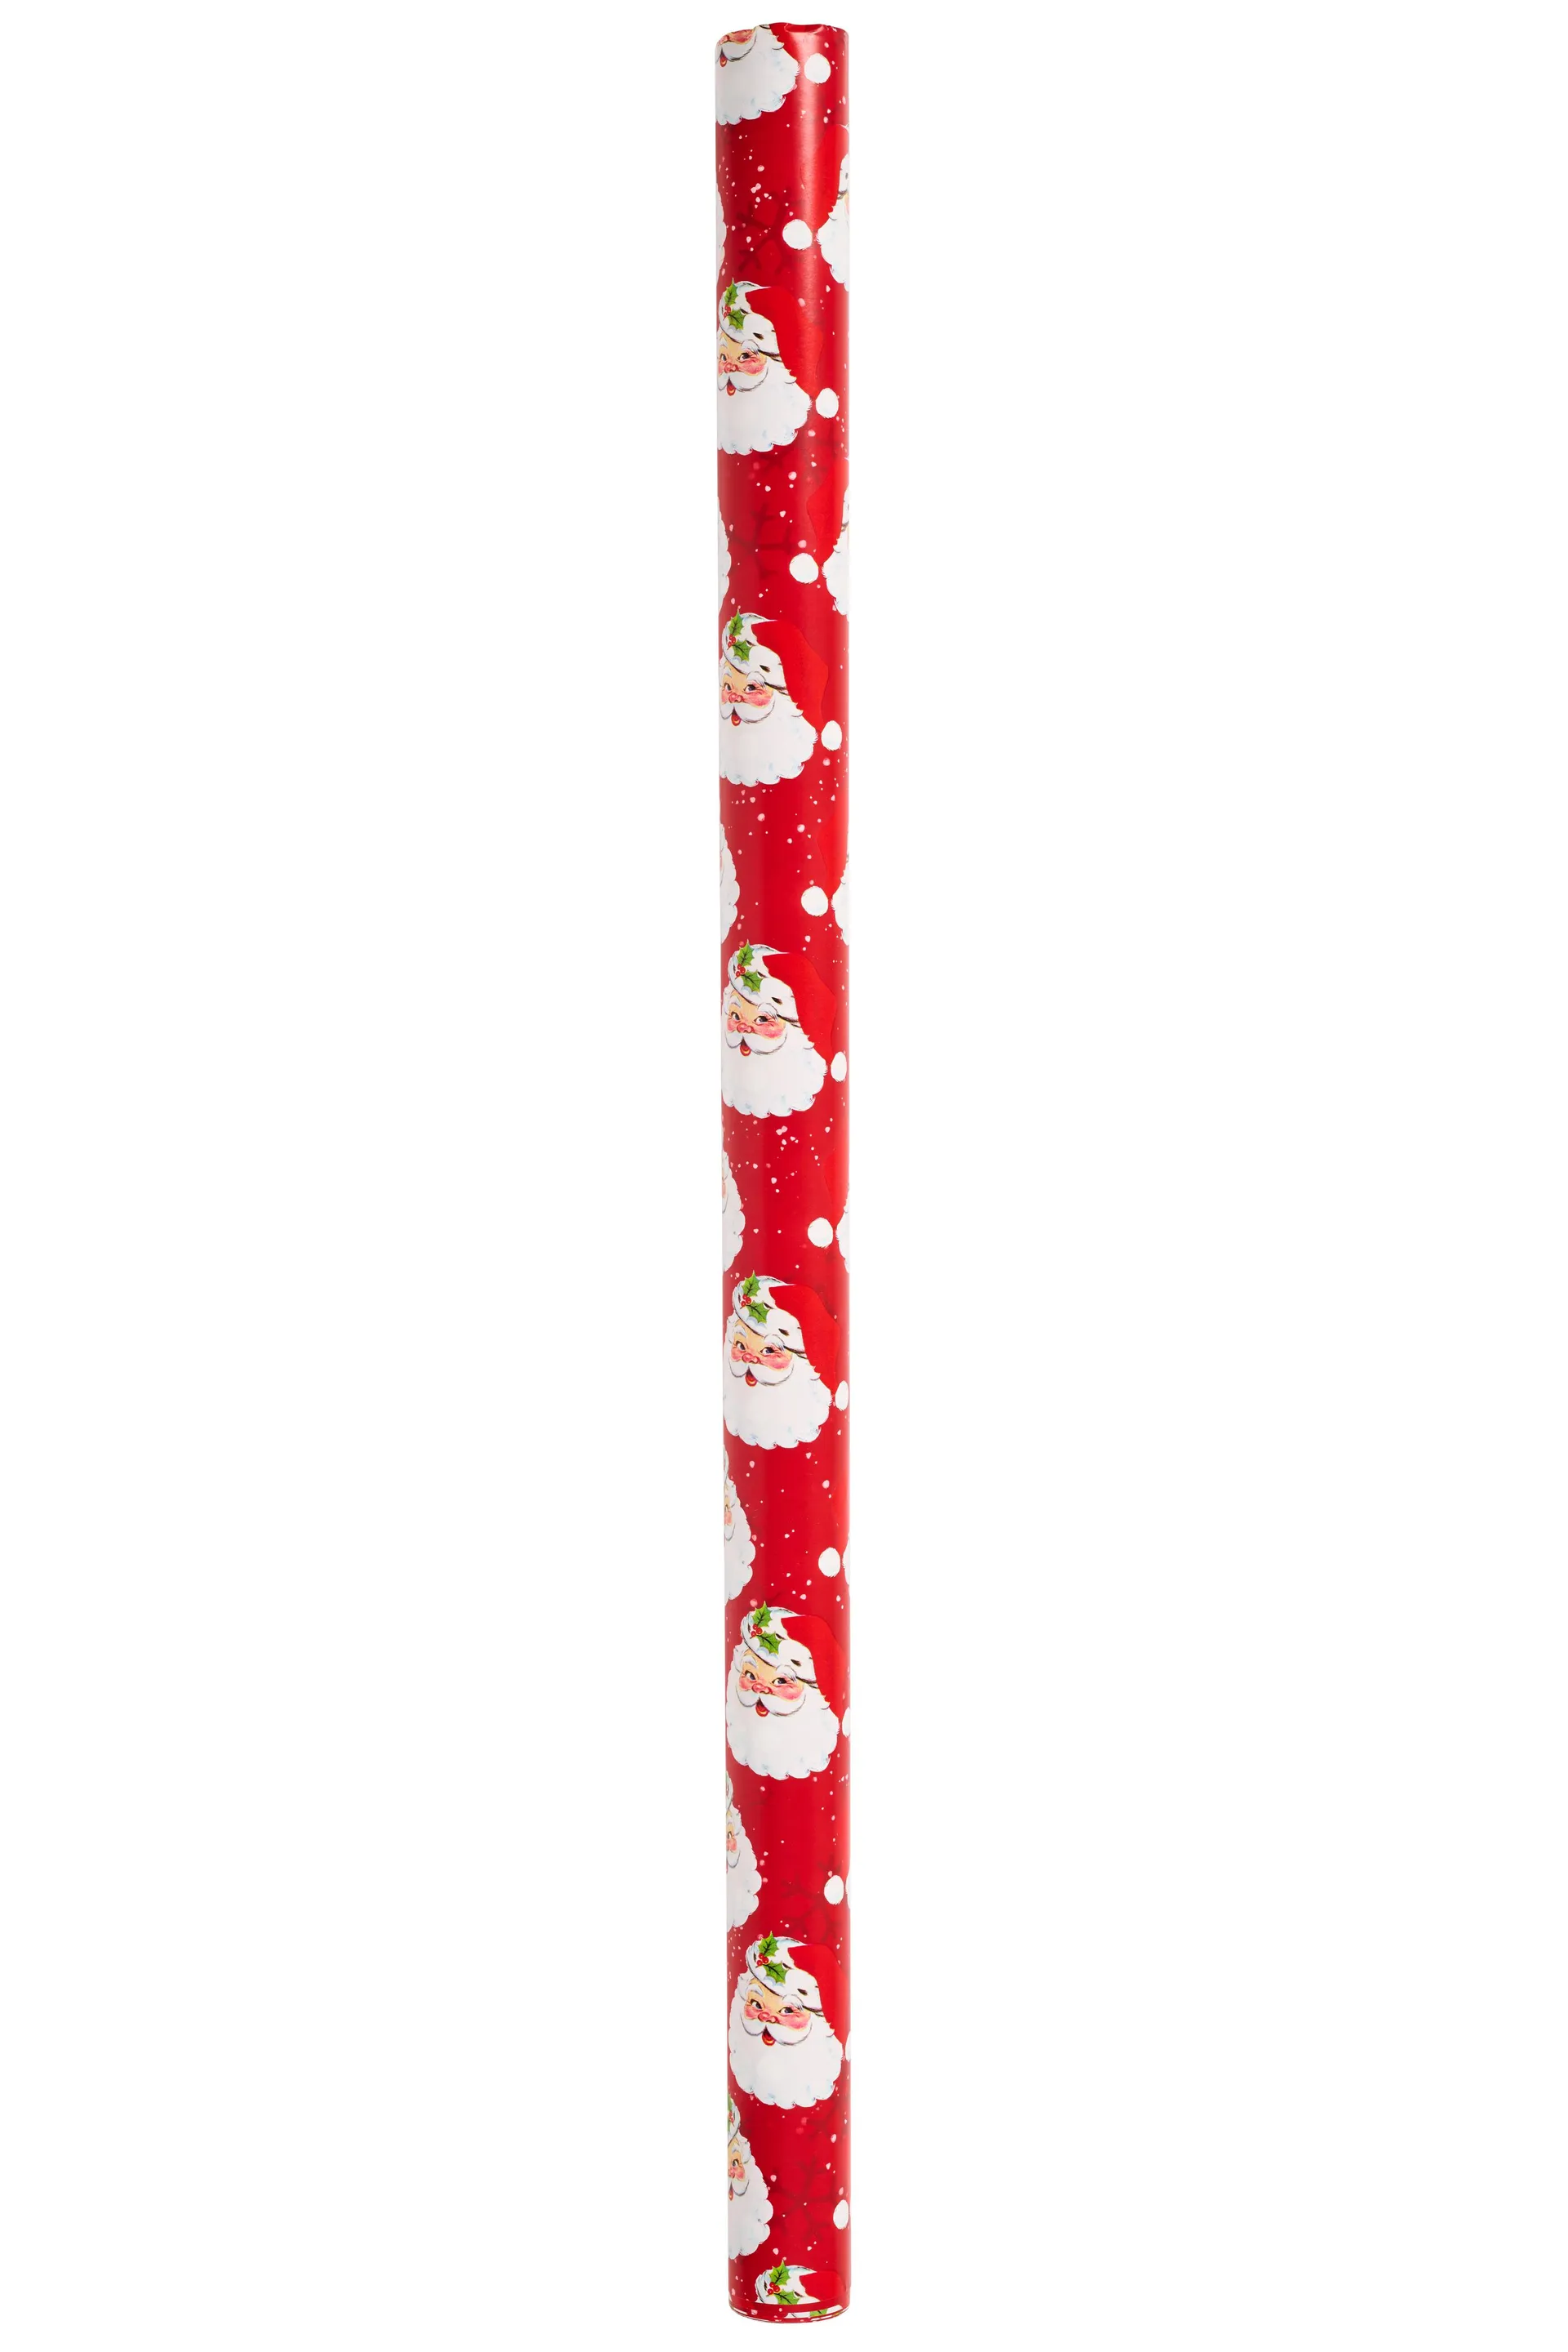 WHSmith Roll Wrap Traditional Santa Red 4m